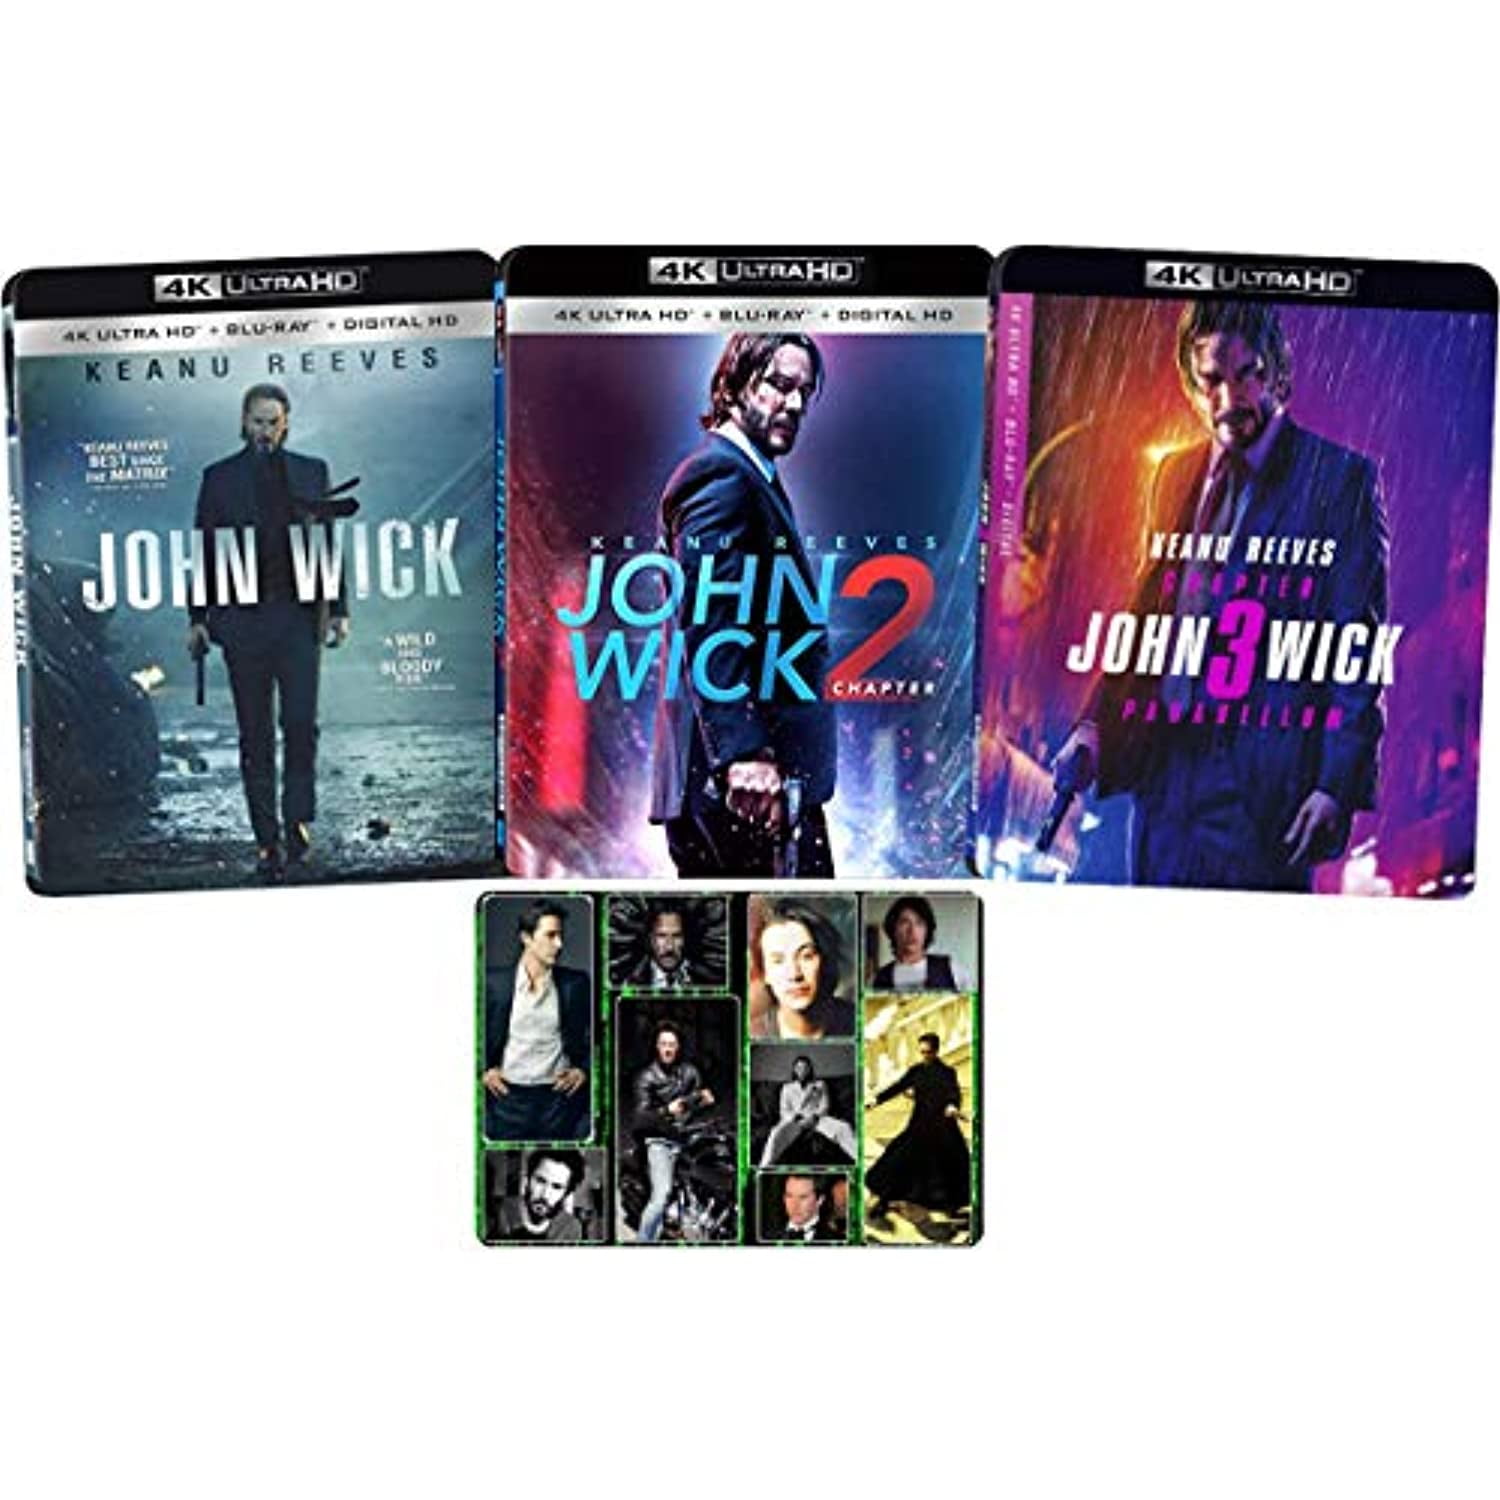 John Wick (2014), John Wick (2014) movie.tipsfromexperts.or…